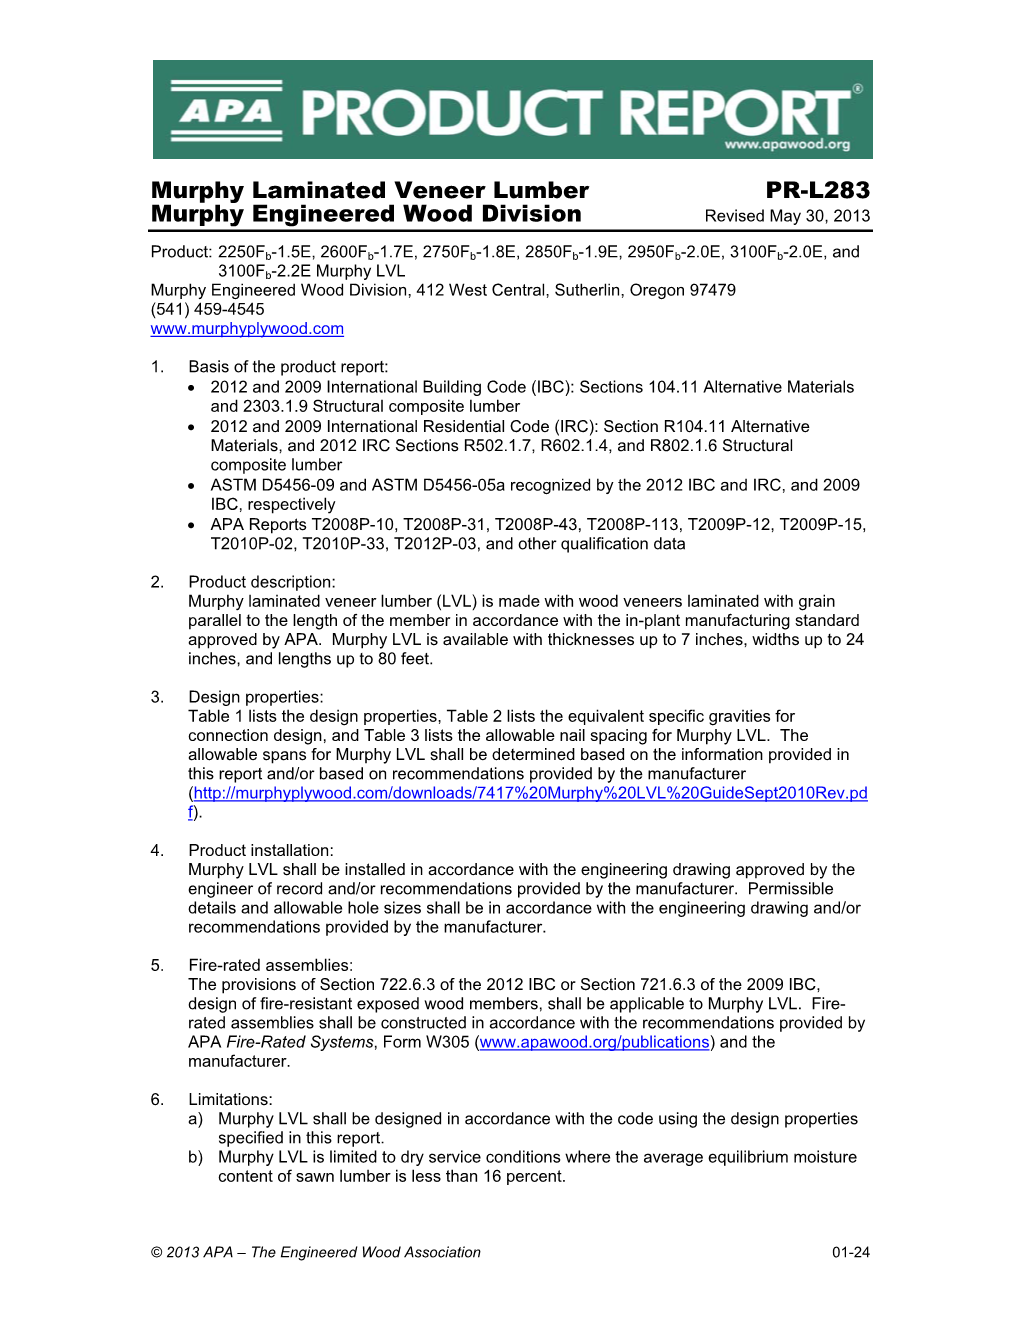 Murphy Laminated Veneer Lumber PR-L283 Murphy Engineered Wood Division Revised May 30, 2013